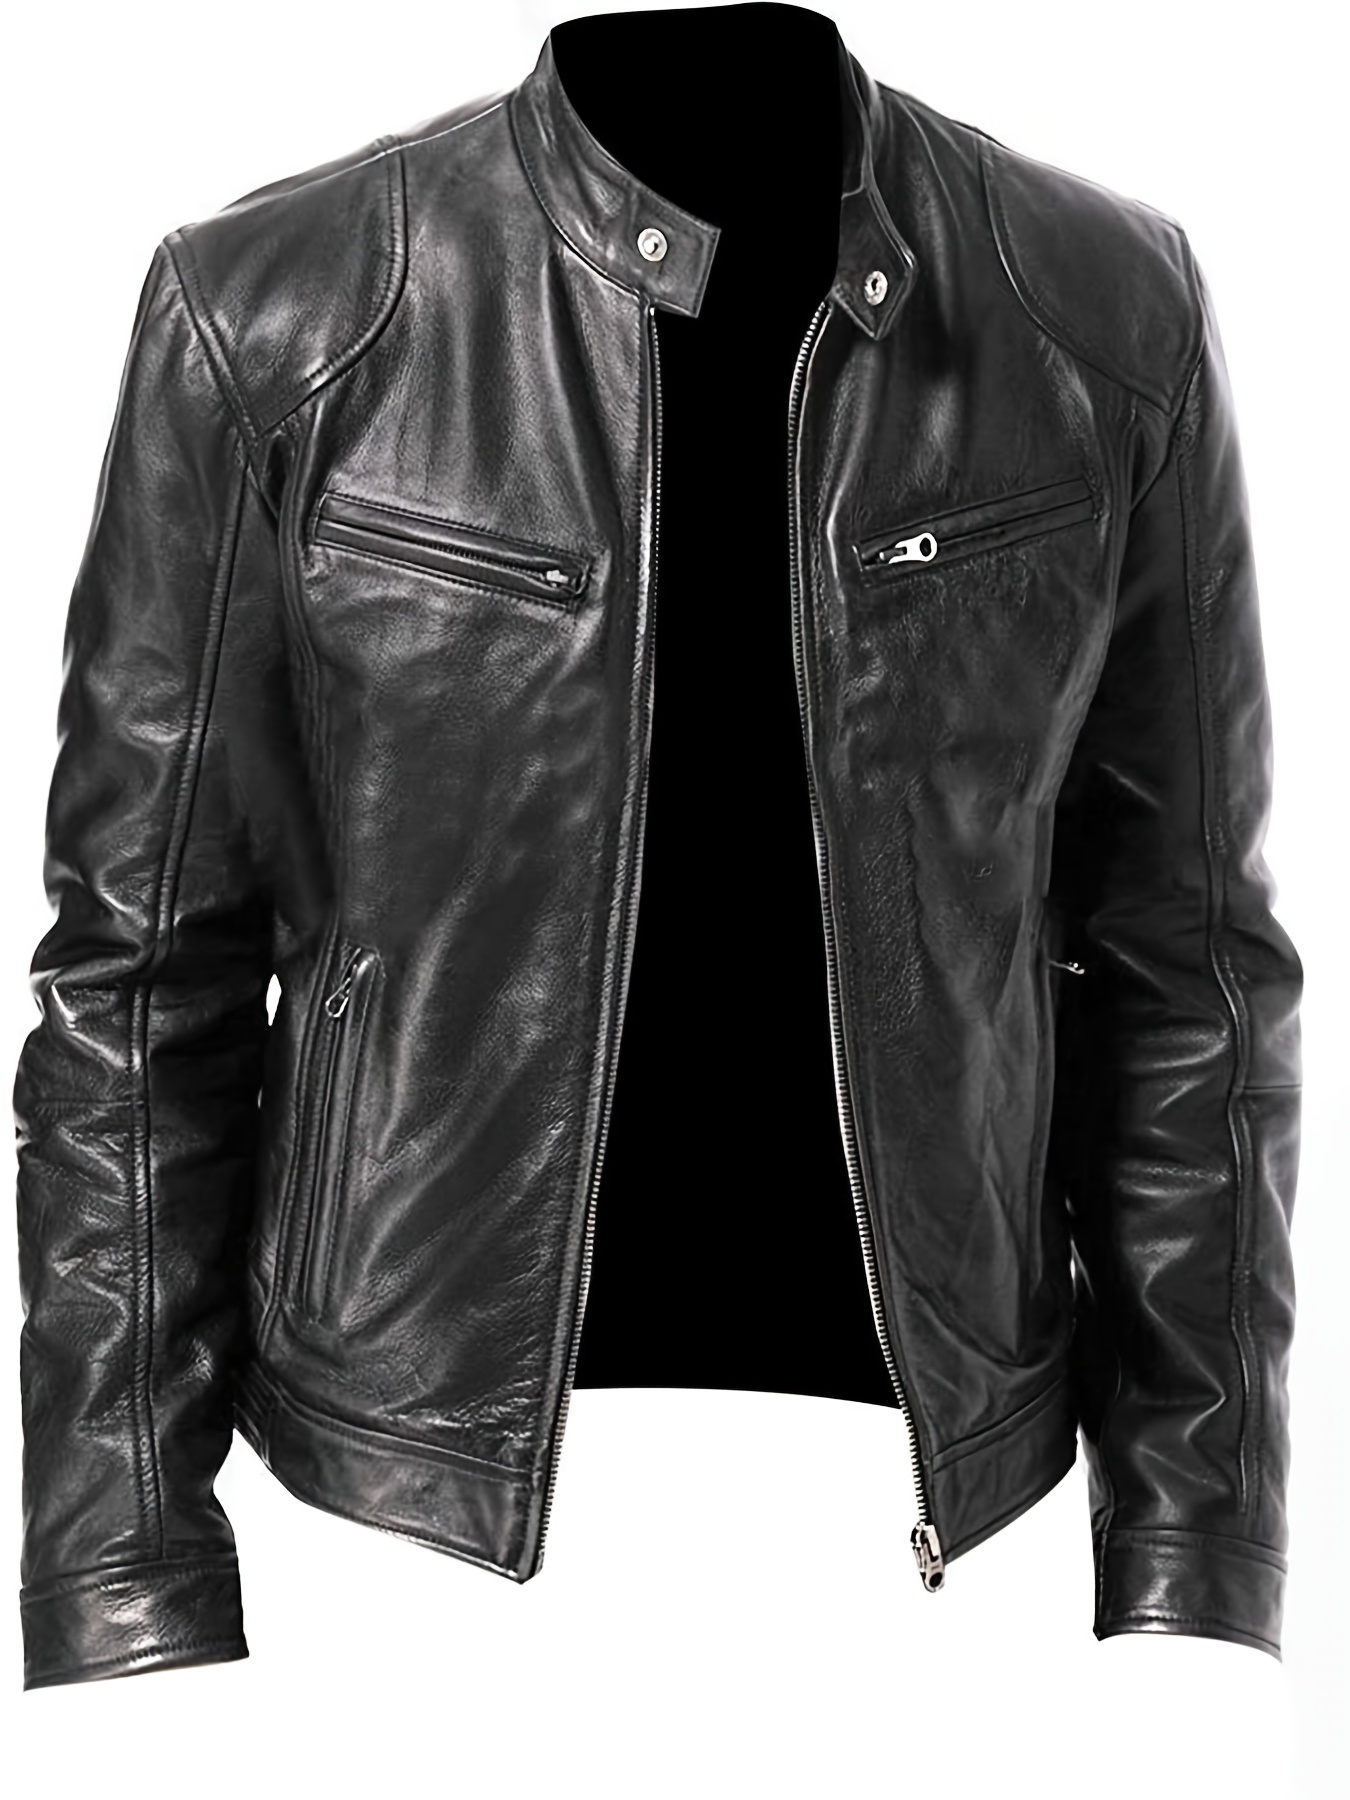 Men's Leather Jackets: Bomber, Motorcycle, Biker